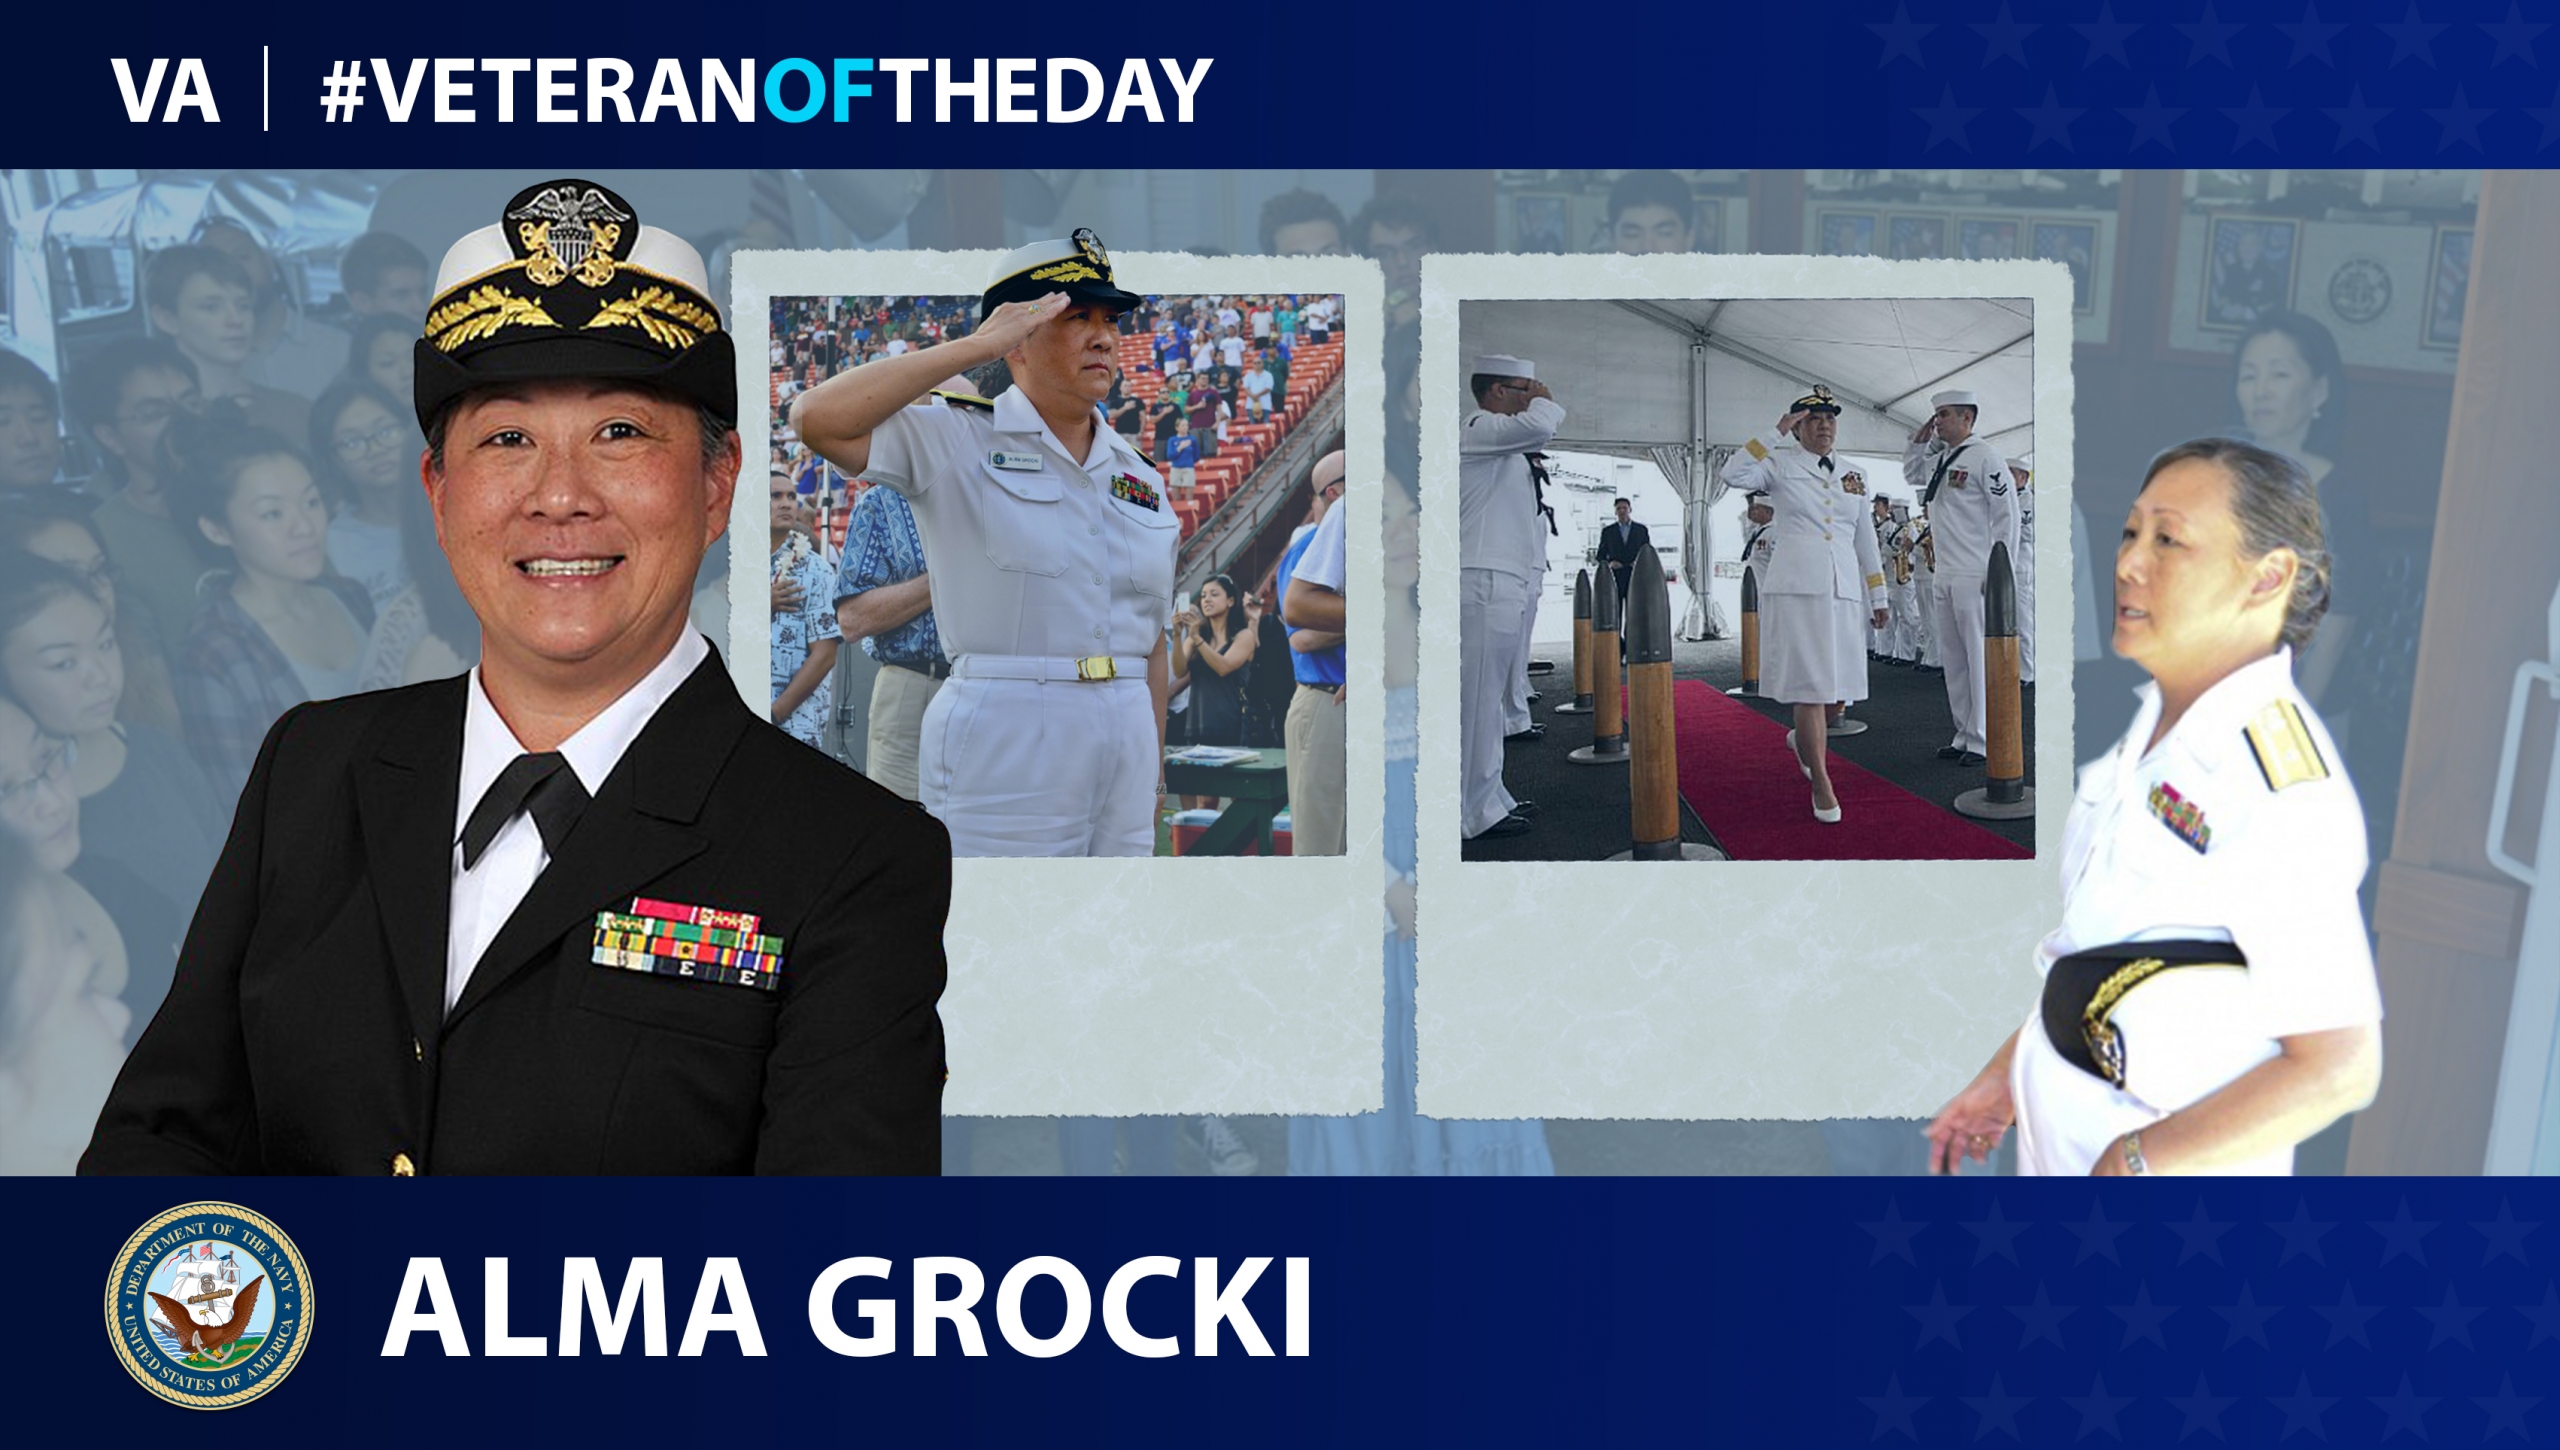 Navy Veteran Alma Grocki is today’s Veteran of the Day.